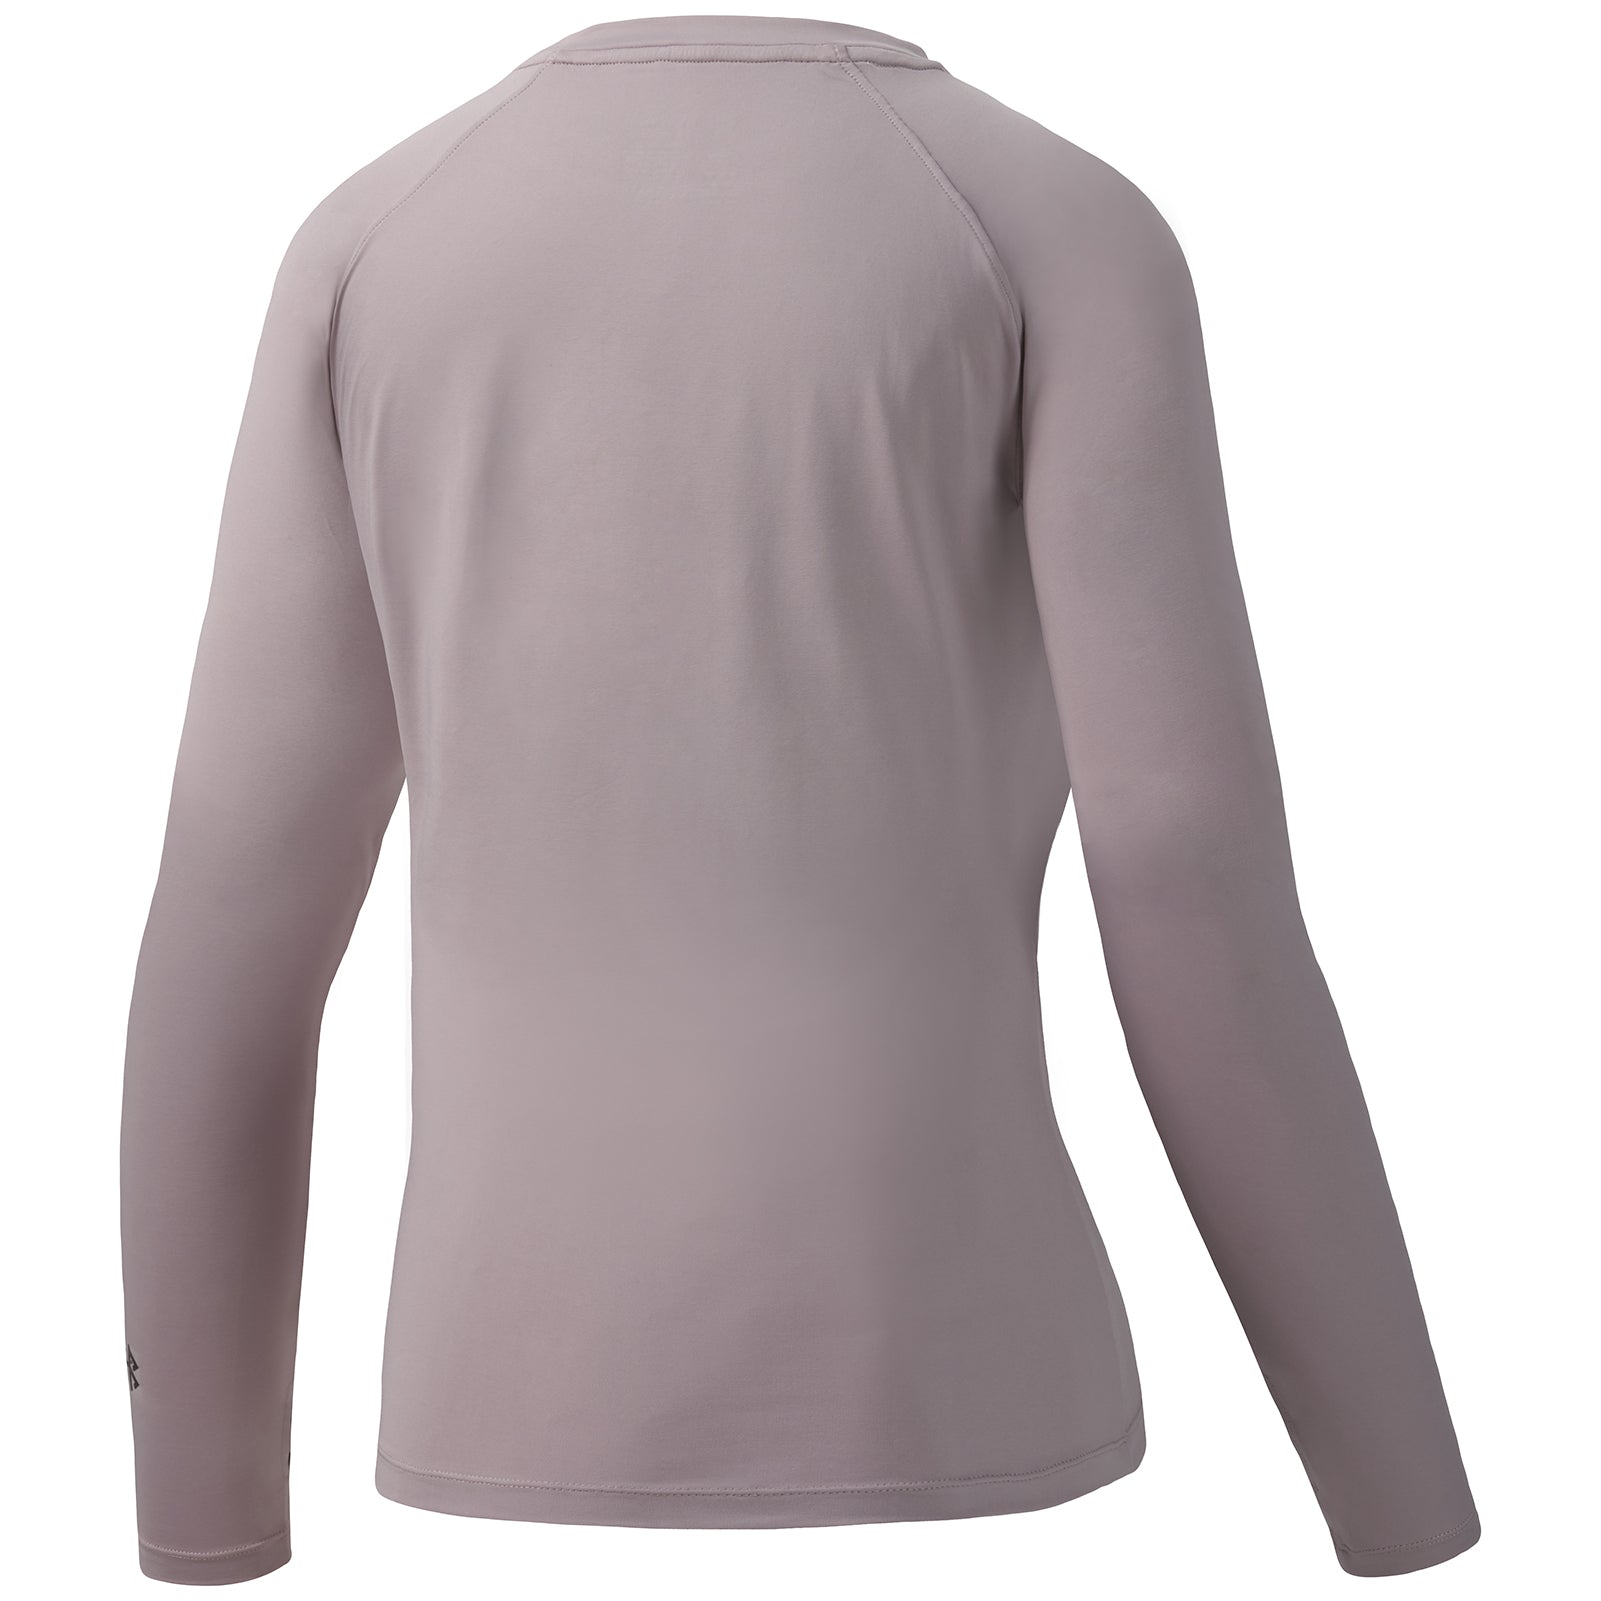  BASSDASH Women's UPF 50+ UV Sun Protection Long Sleeve Shirts  Quick Dry T-Shirt for Fishing Hiking Kayaking : Clothing, Shoes & Jewelry